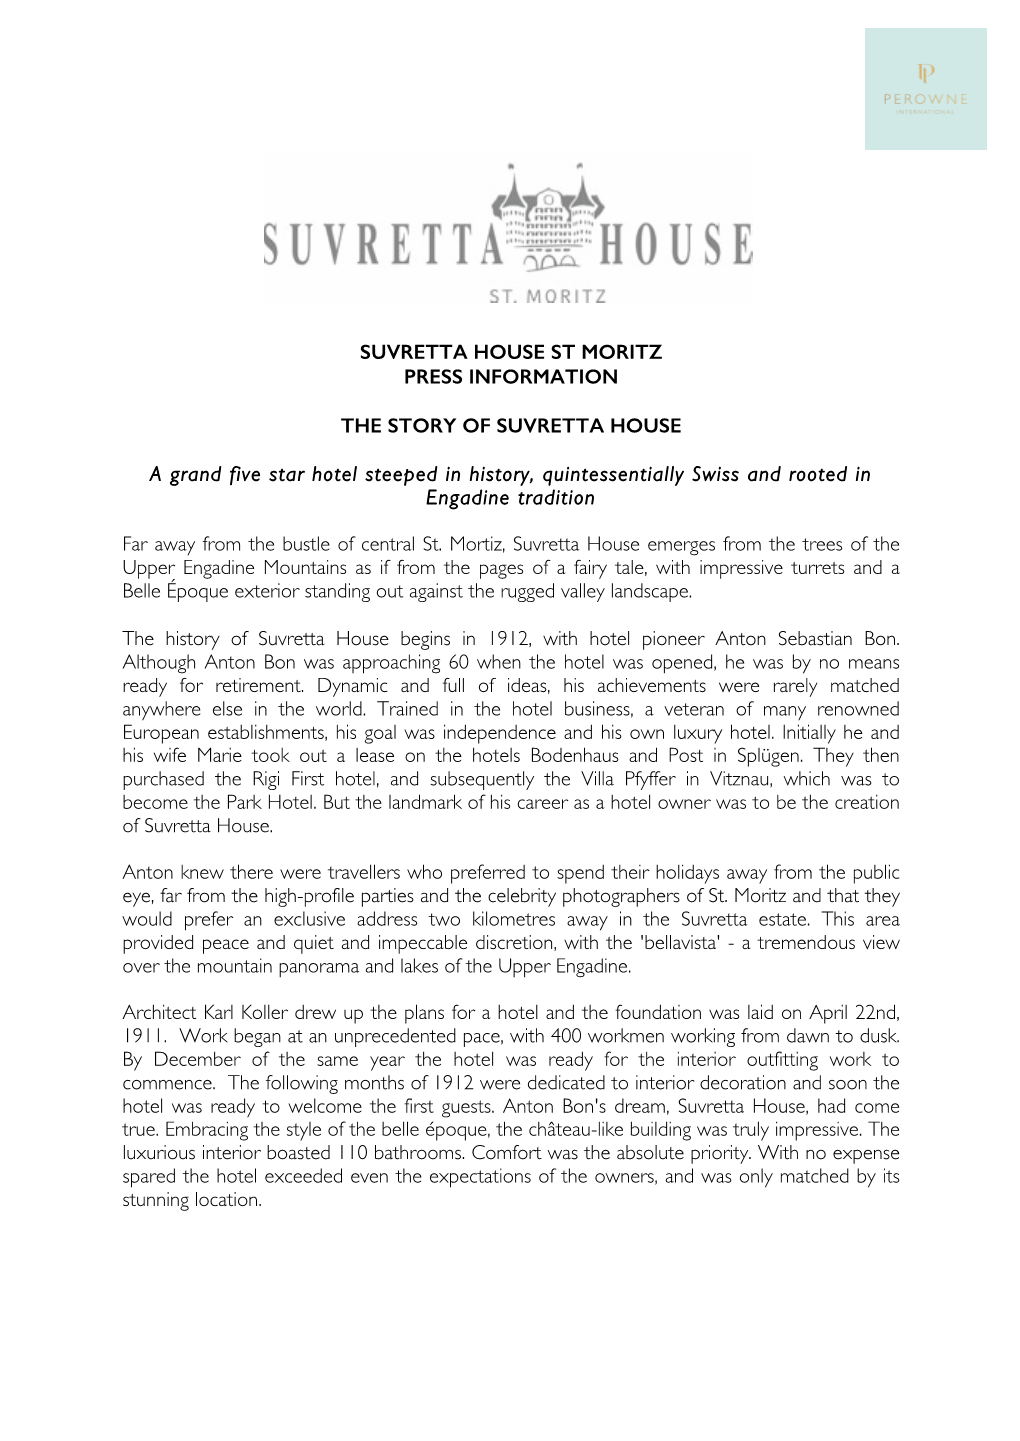 History of the Suvretta House